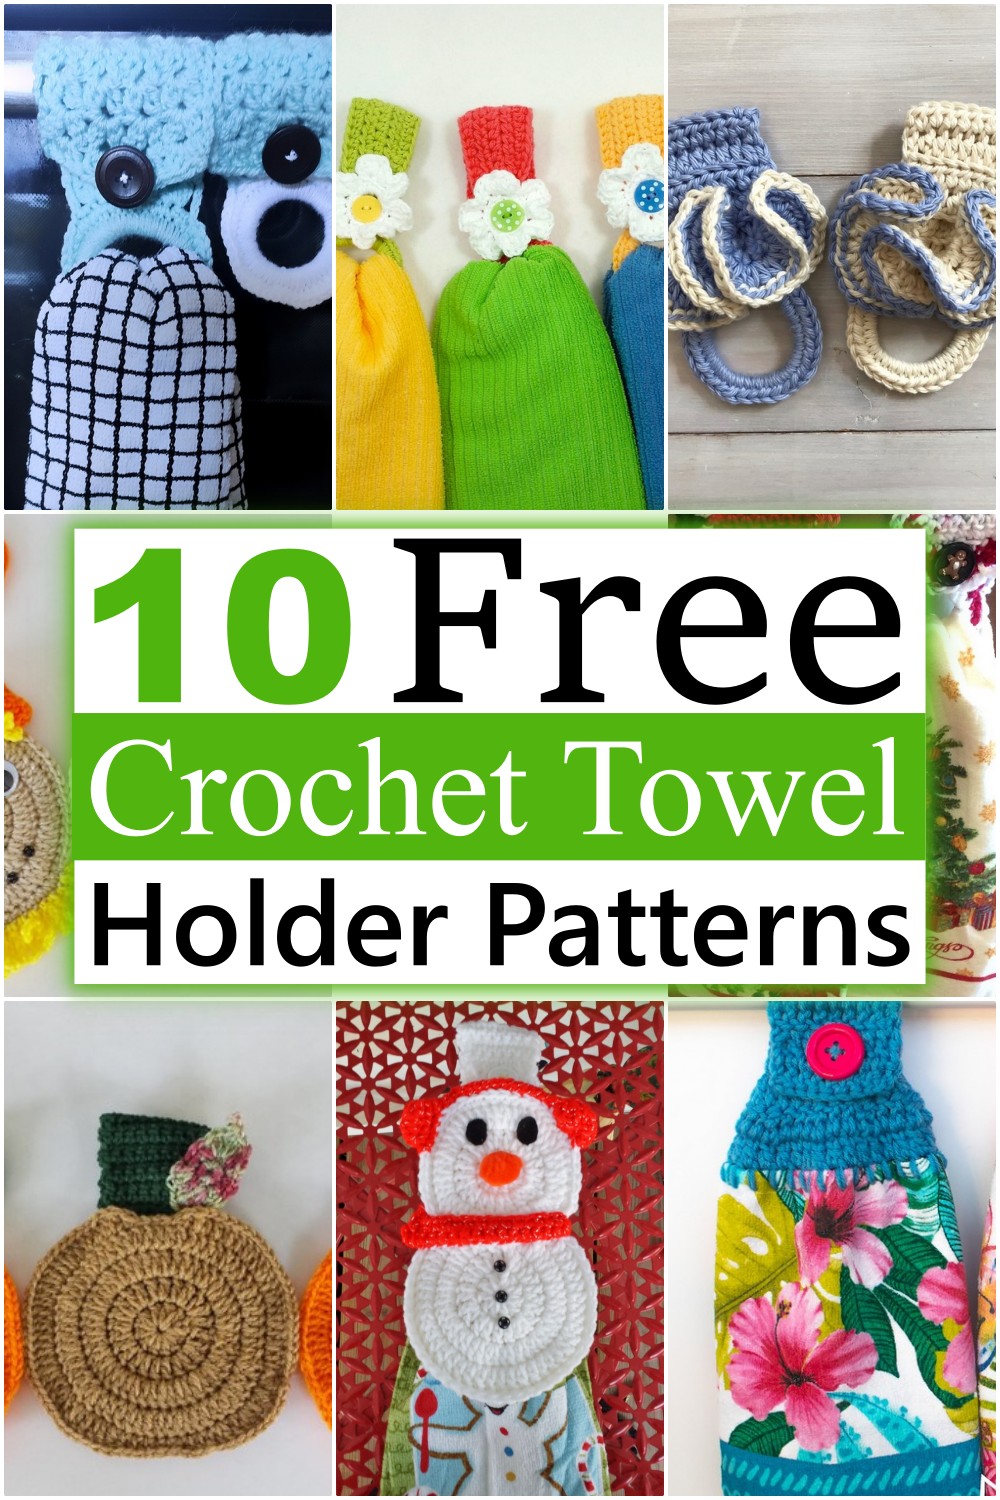 Crochet Towel Holder Patterns